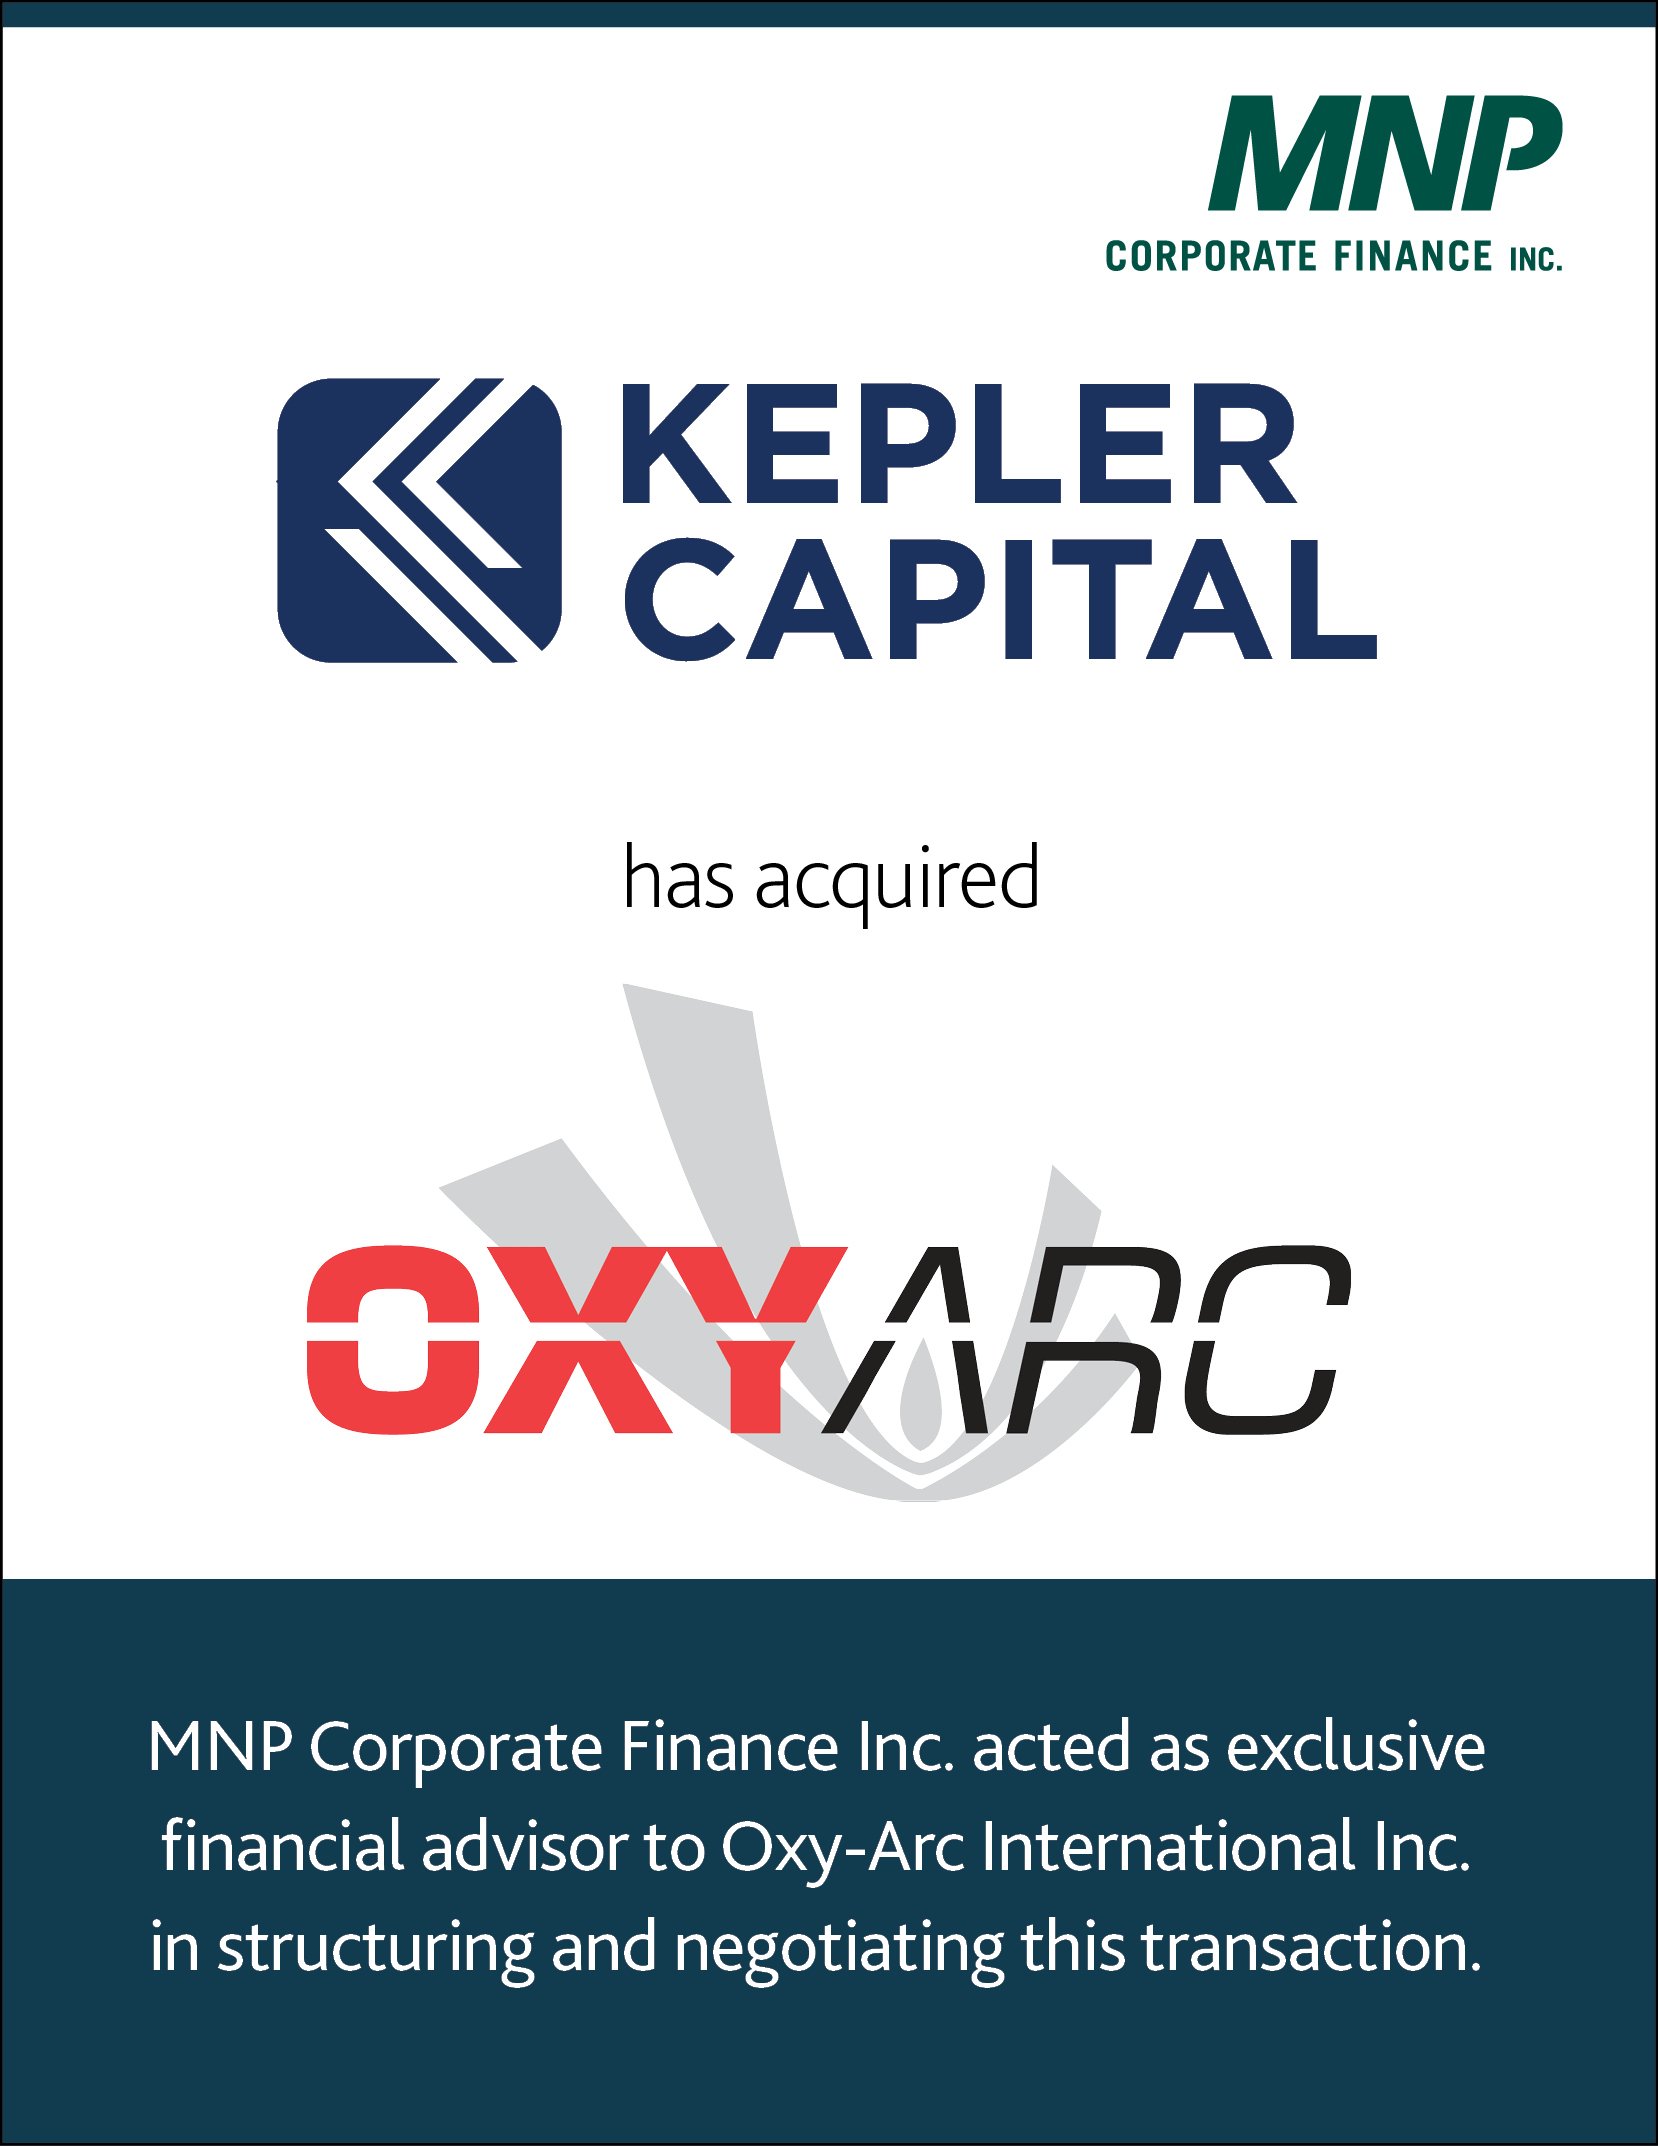 Kepler Capital has acquired Oxyarc